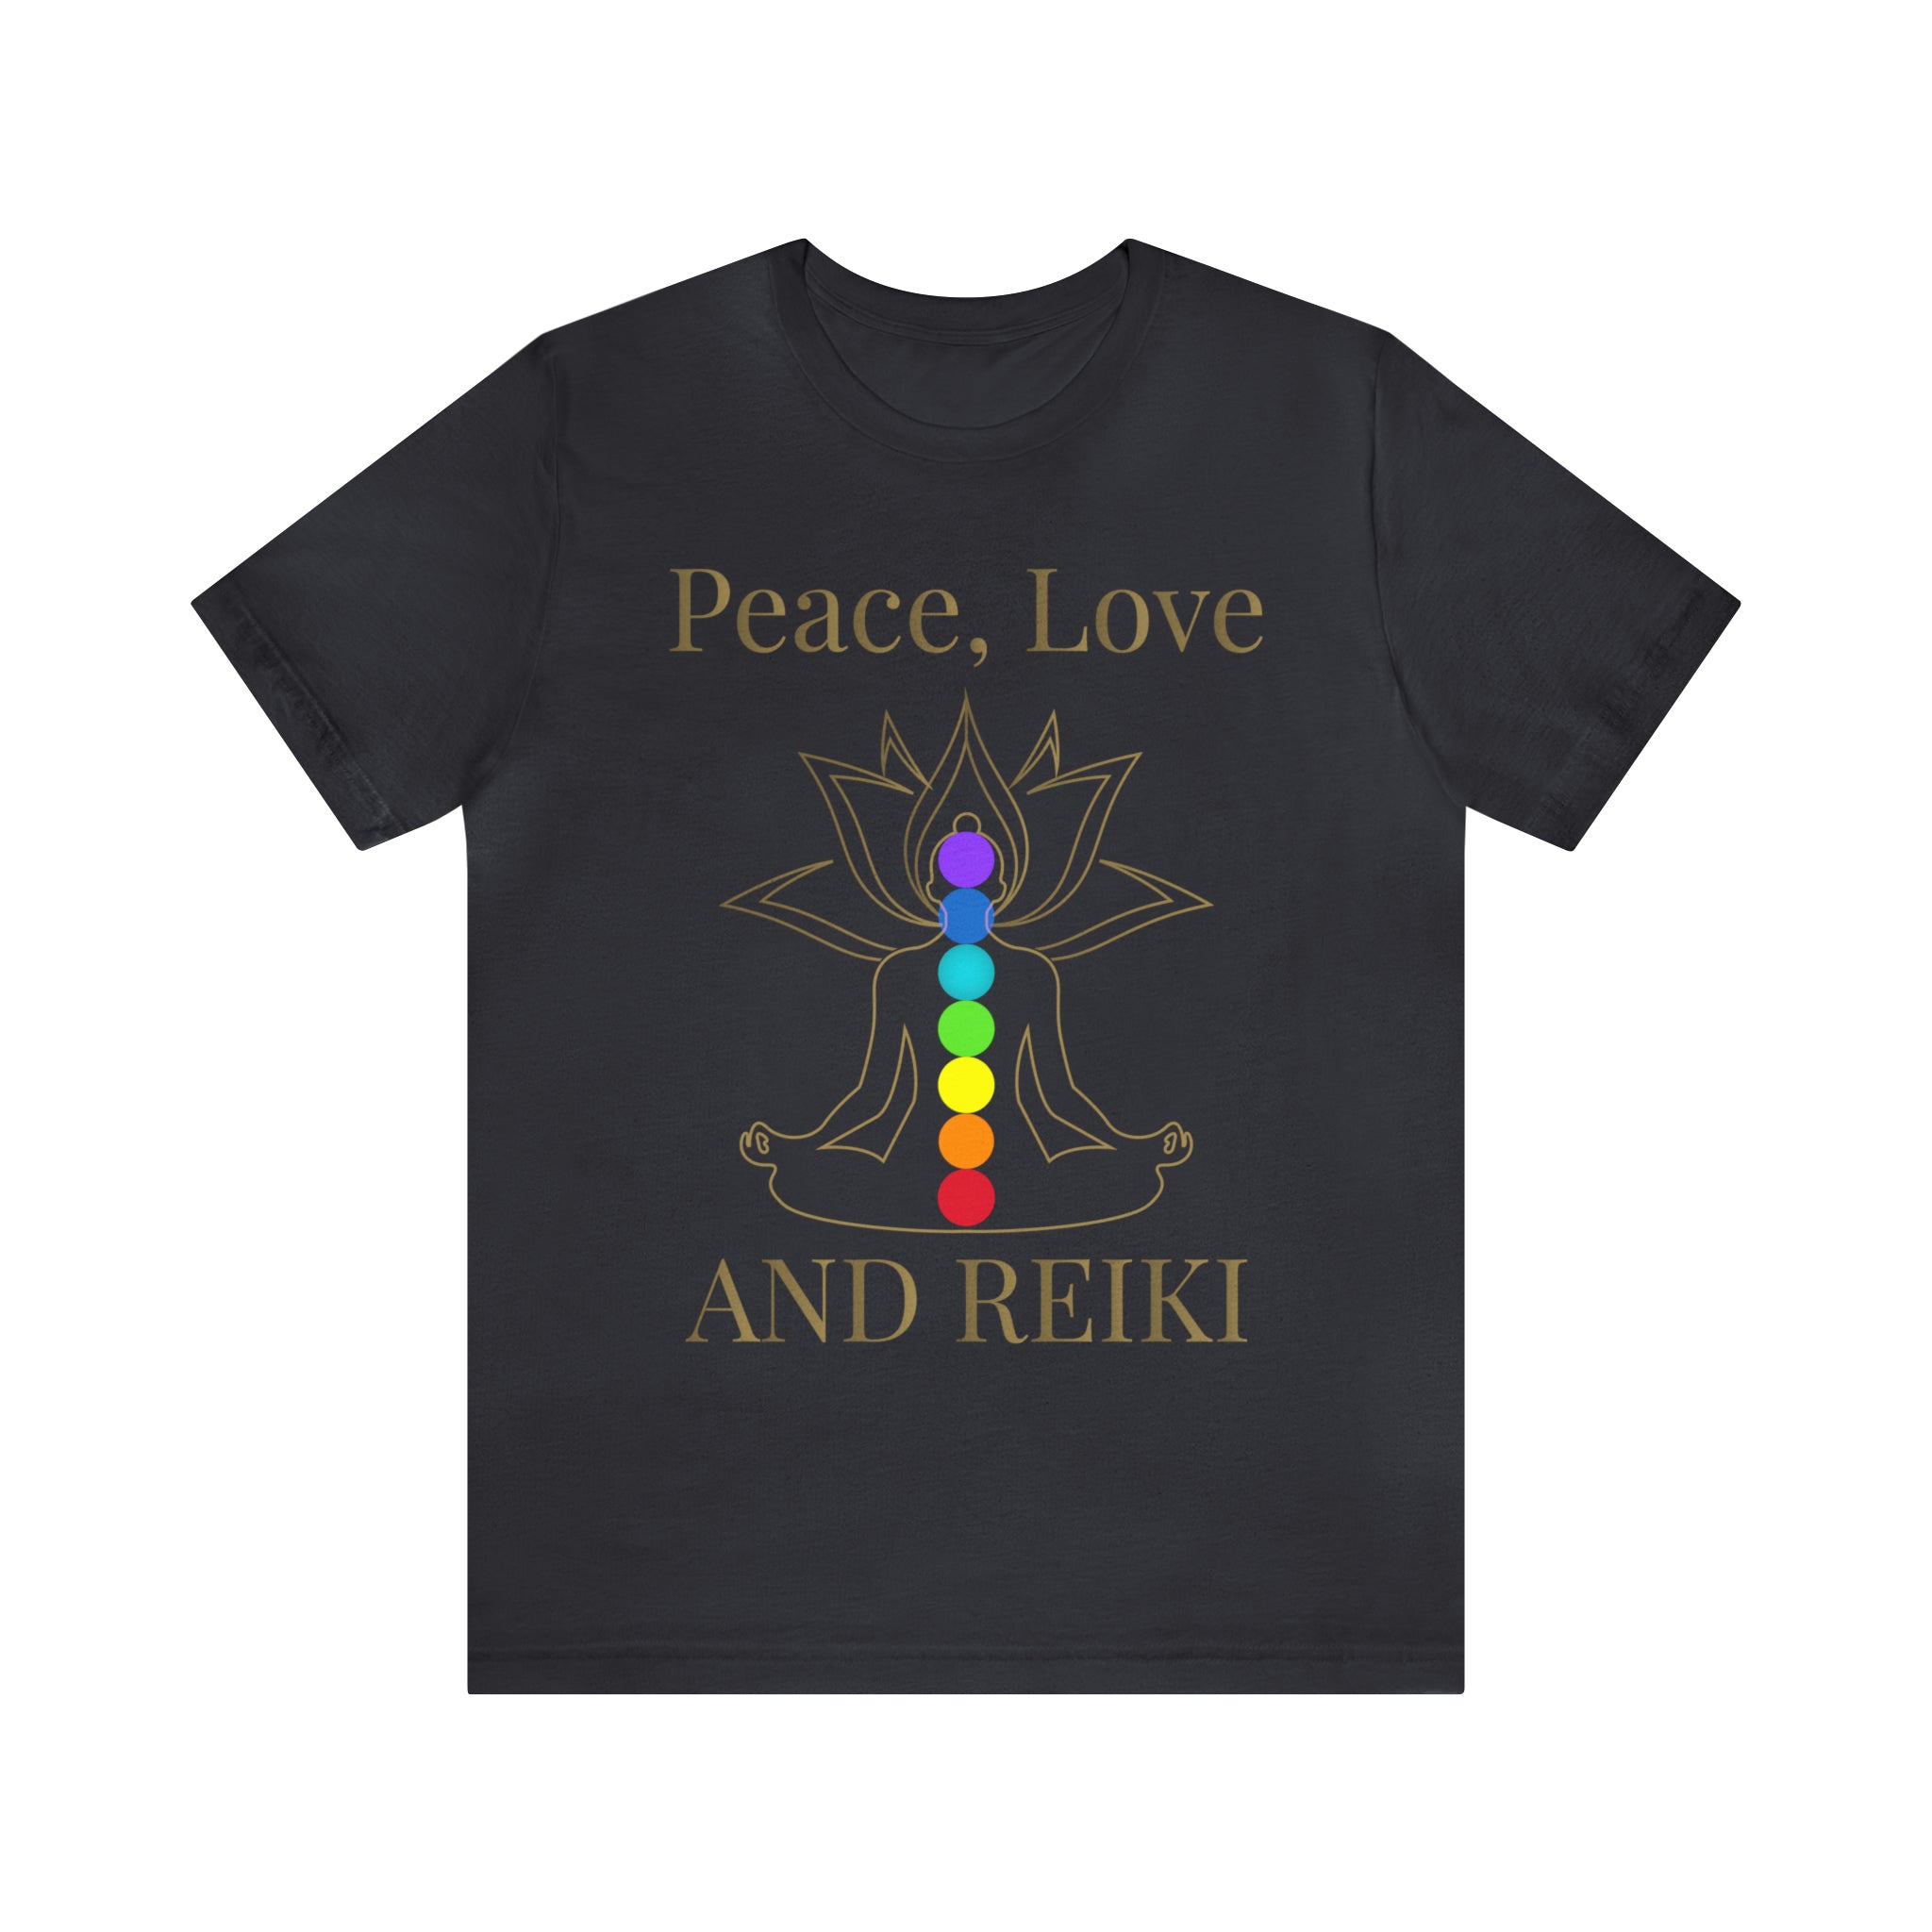 Peace, Love & Reiki Short Sleeve Tee